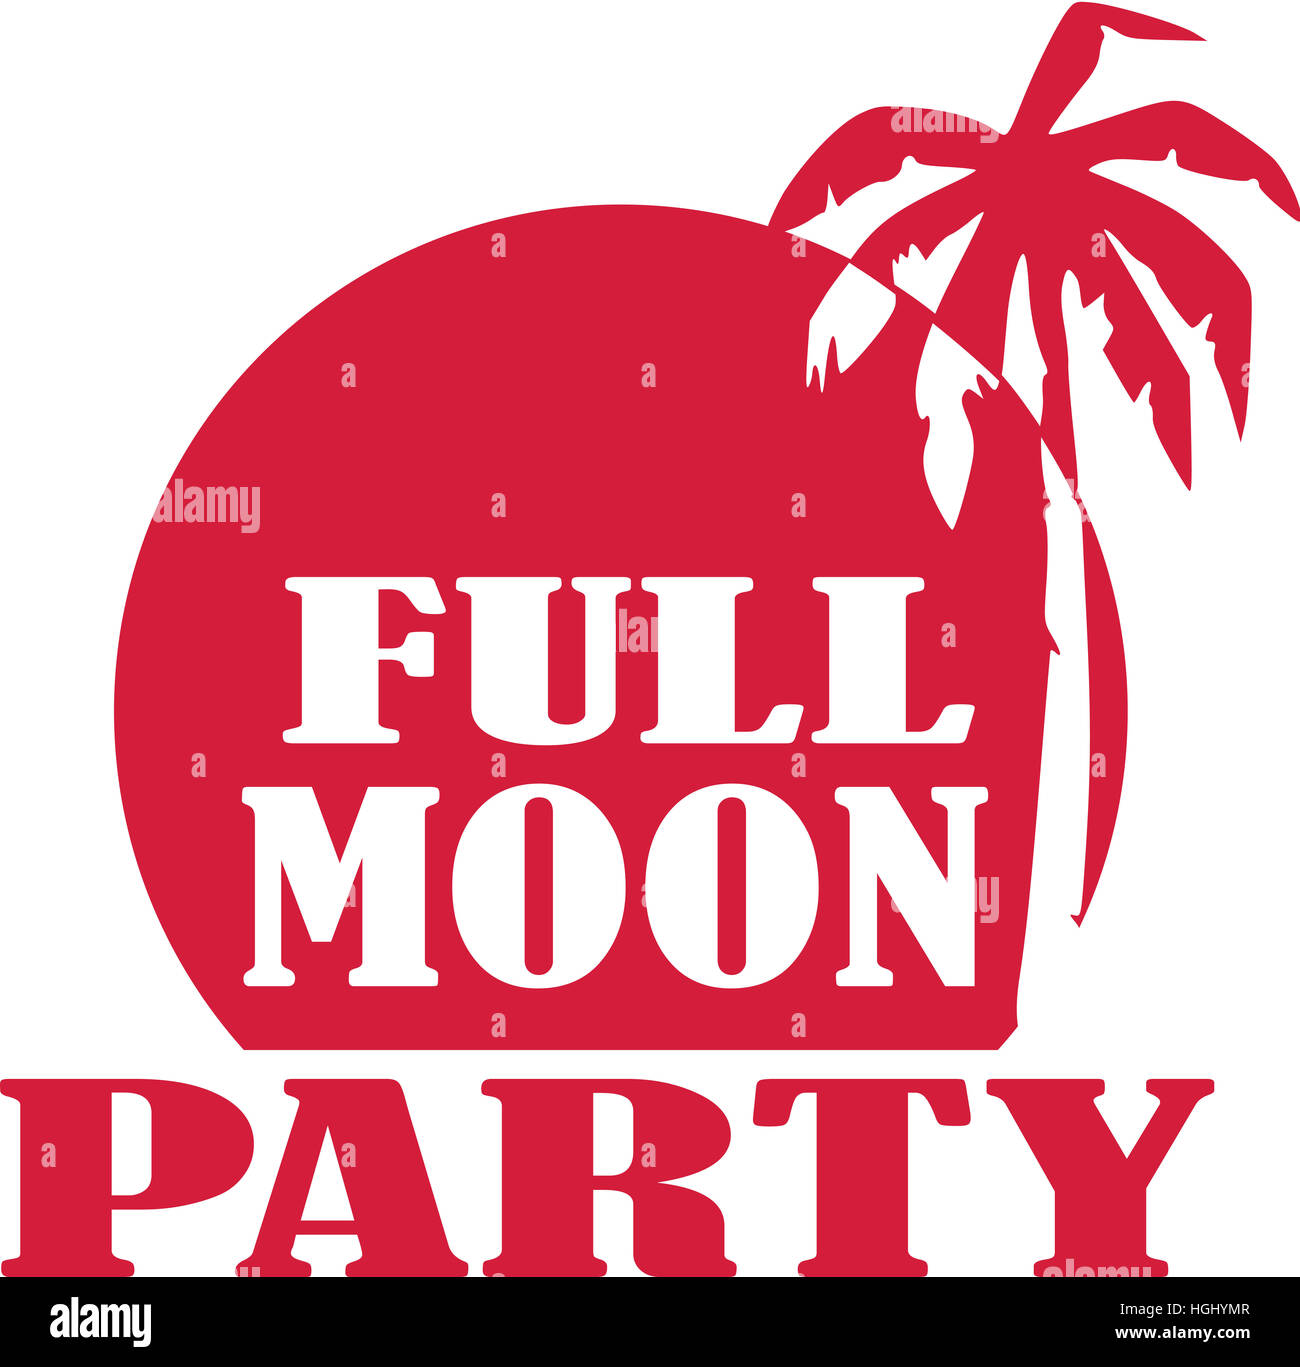 Full moon party at the beach Stock Photo